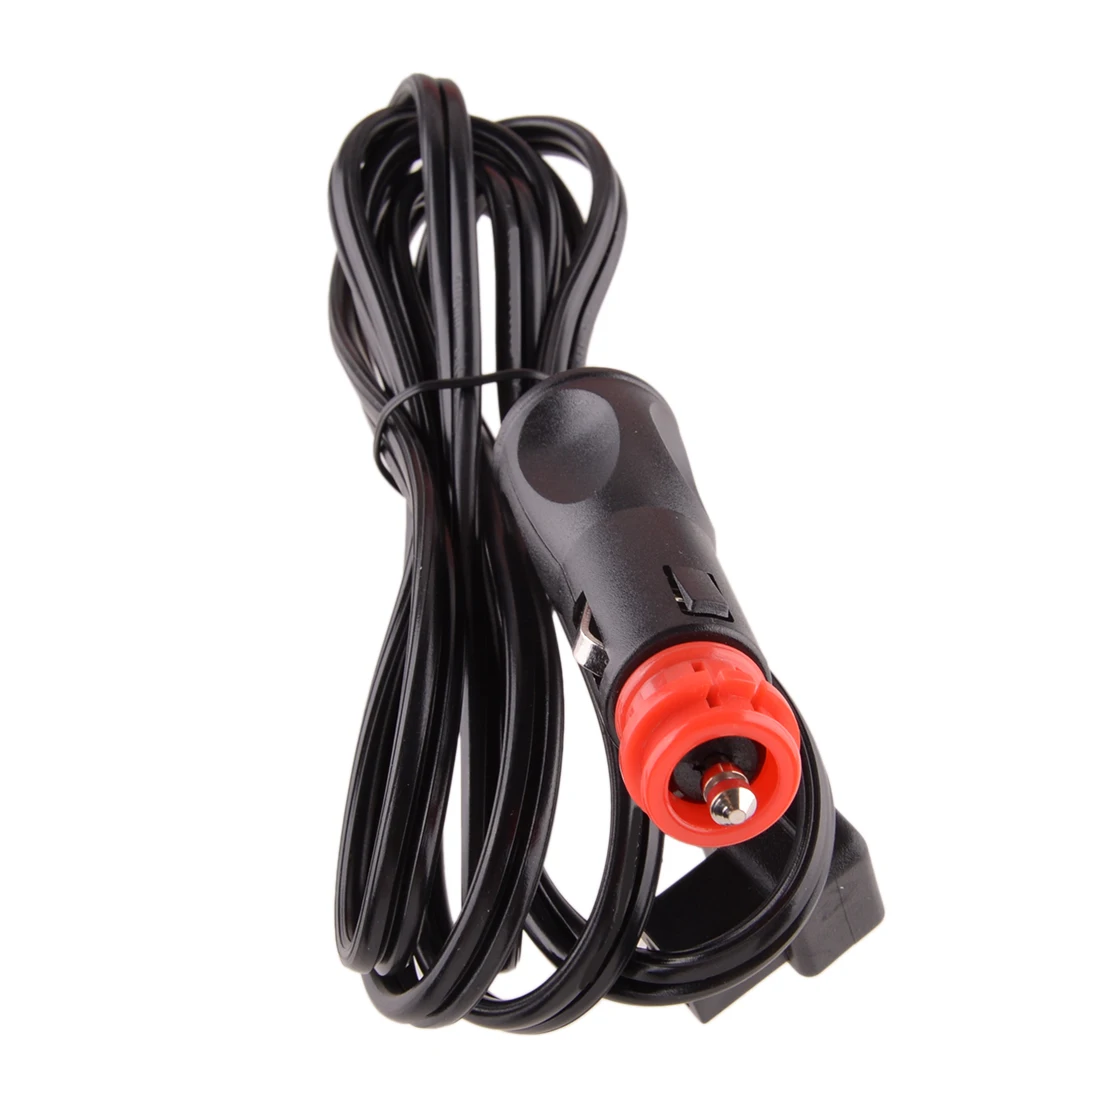 2M Power Cable Line Cord Cigarette Lighter Plug Fit for Car